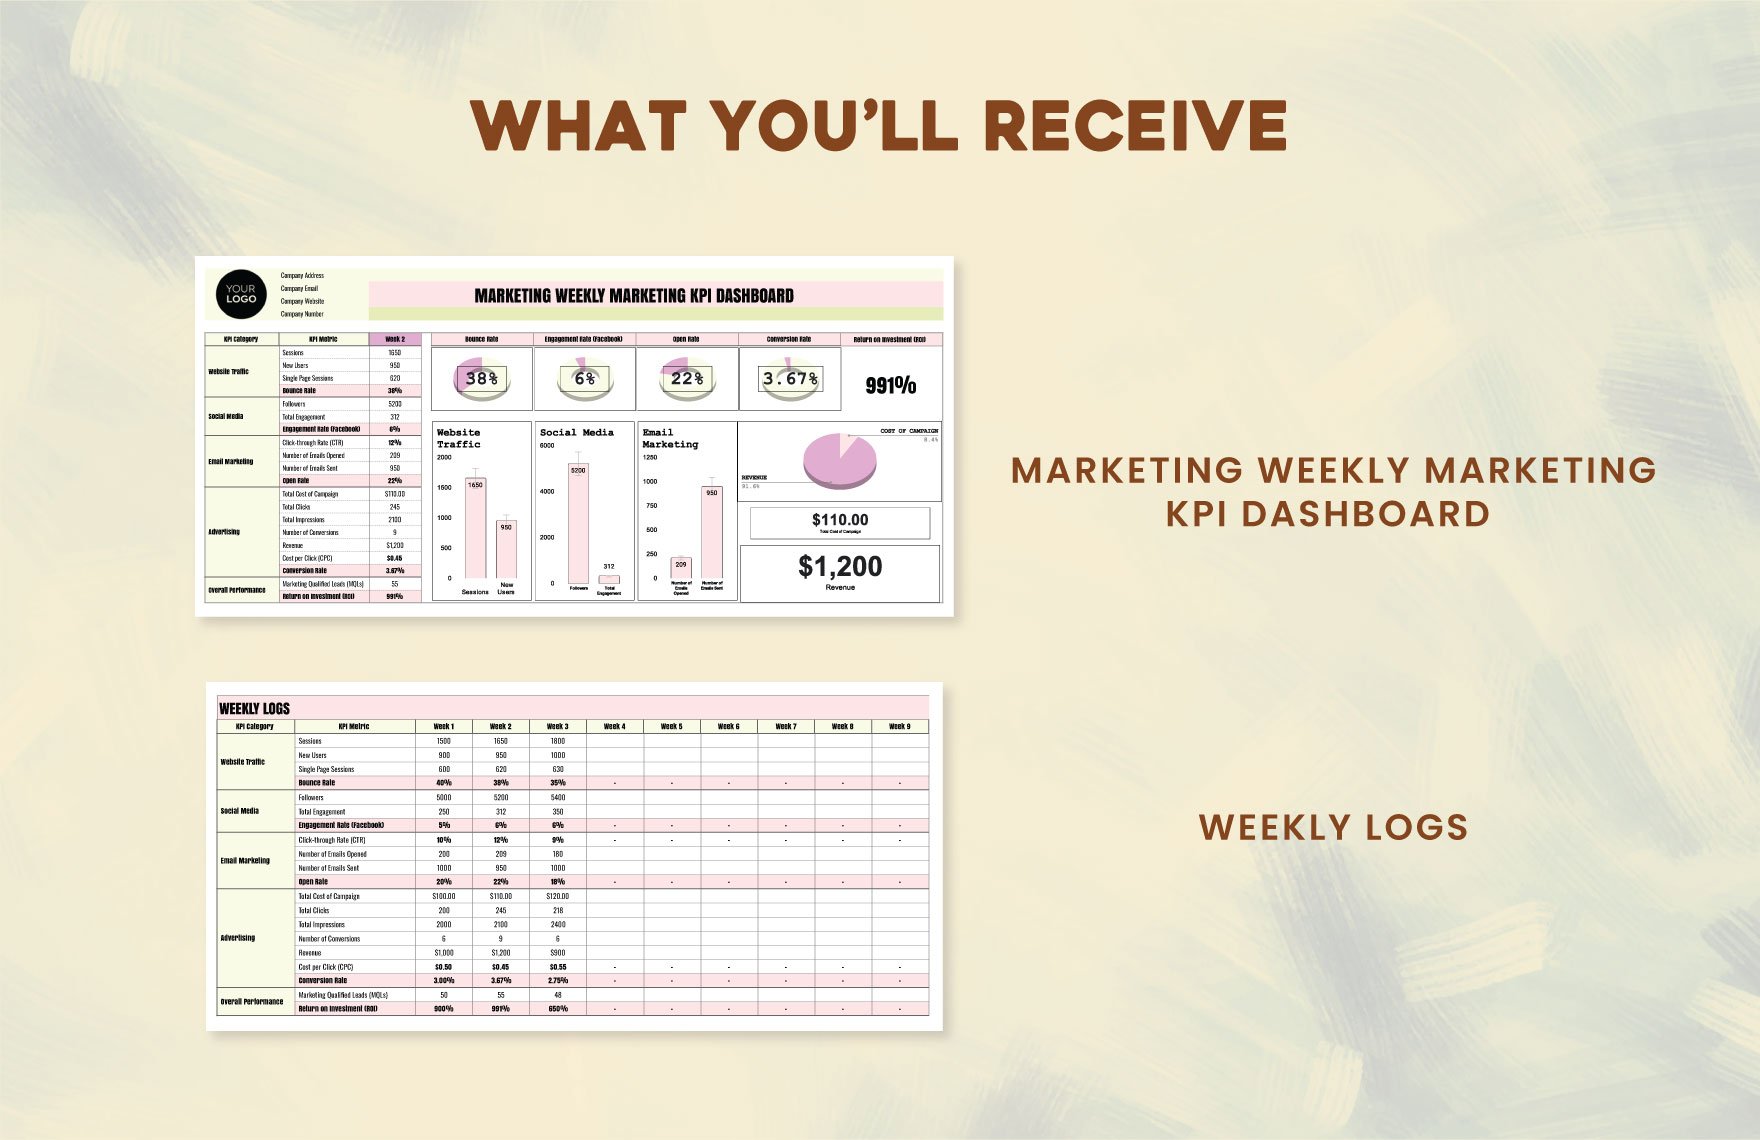 Marketing Weekly Marketing KPI Dashboard Template